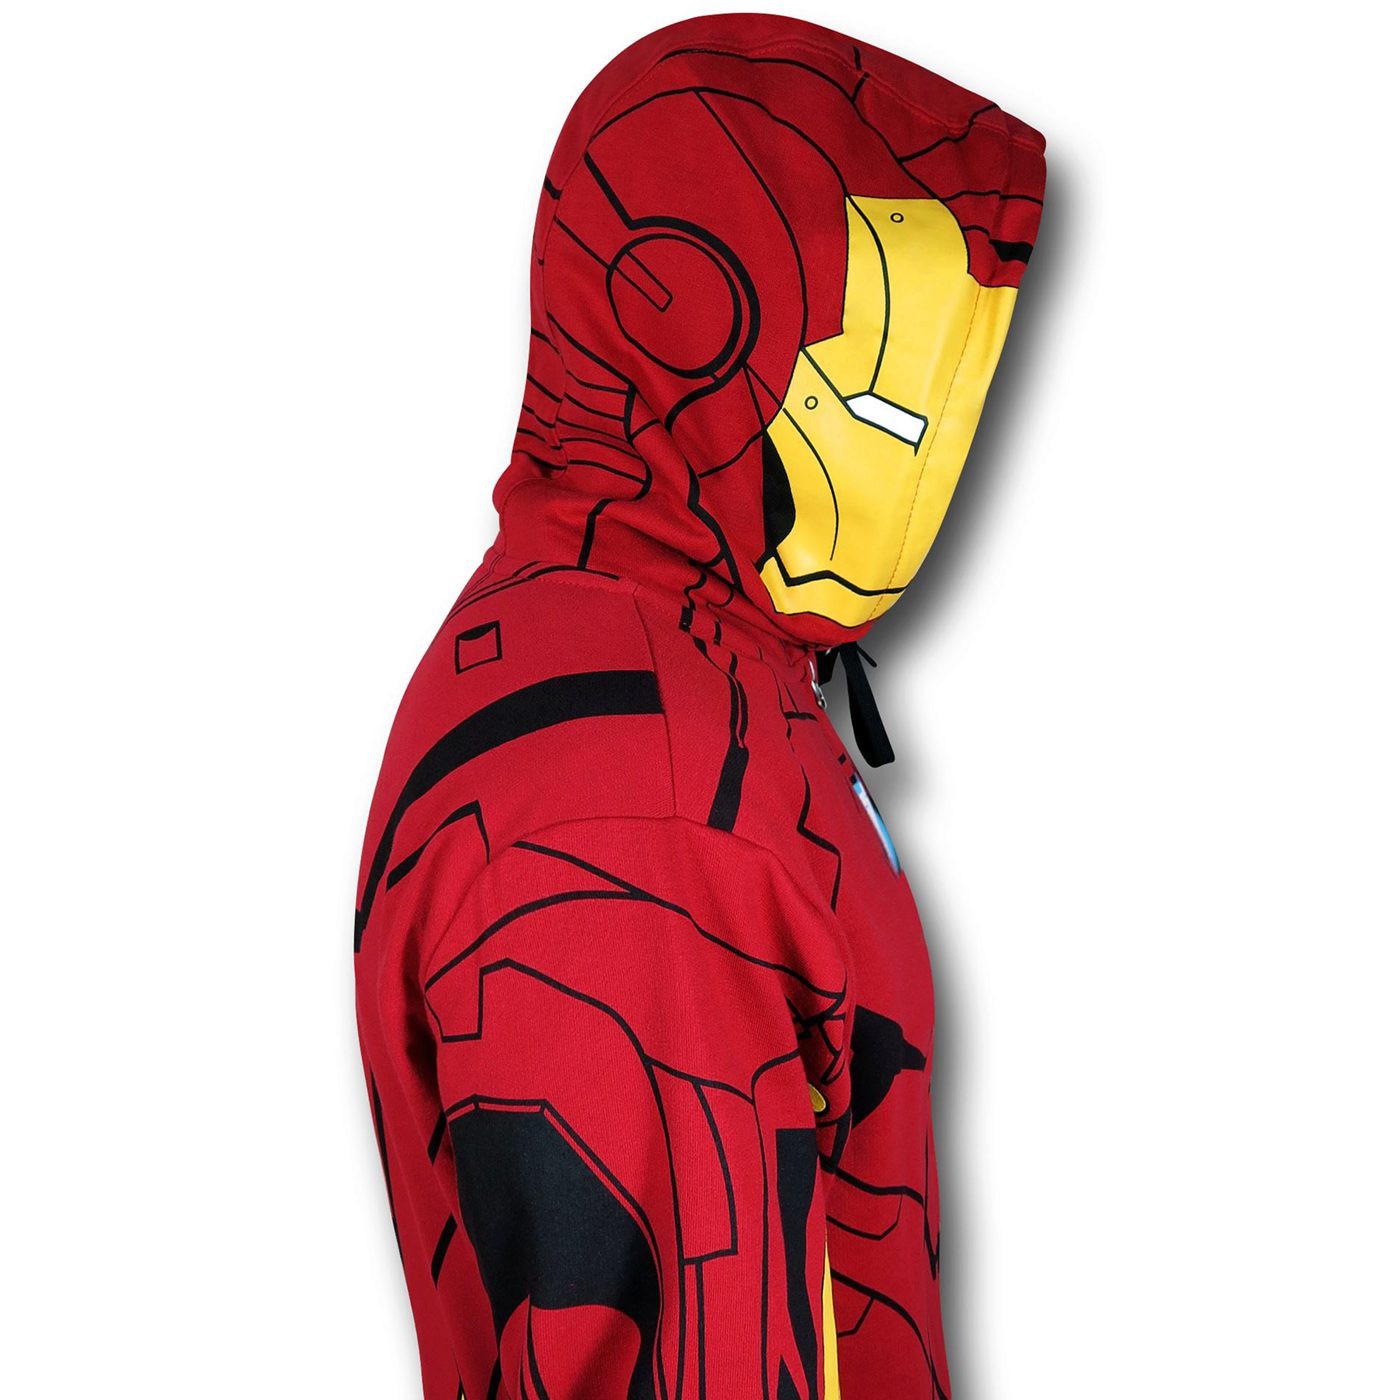 Iron Man Armor Costume Union Suit